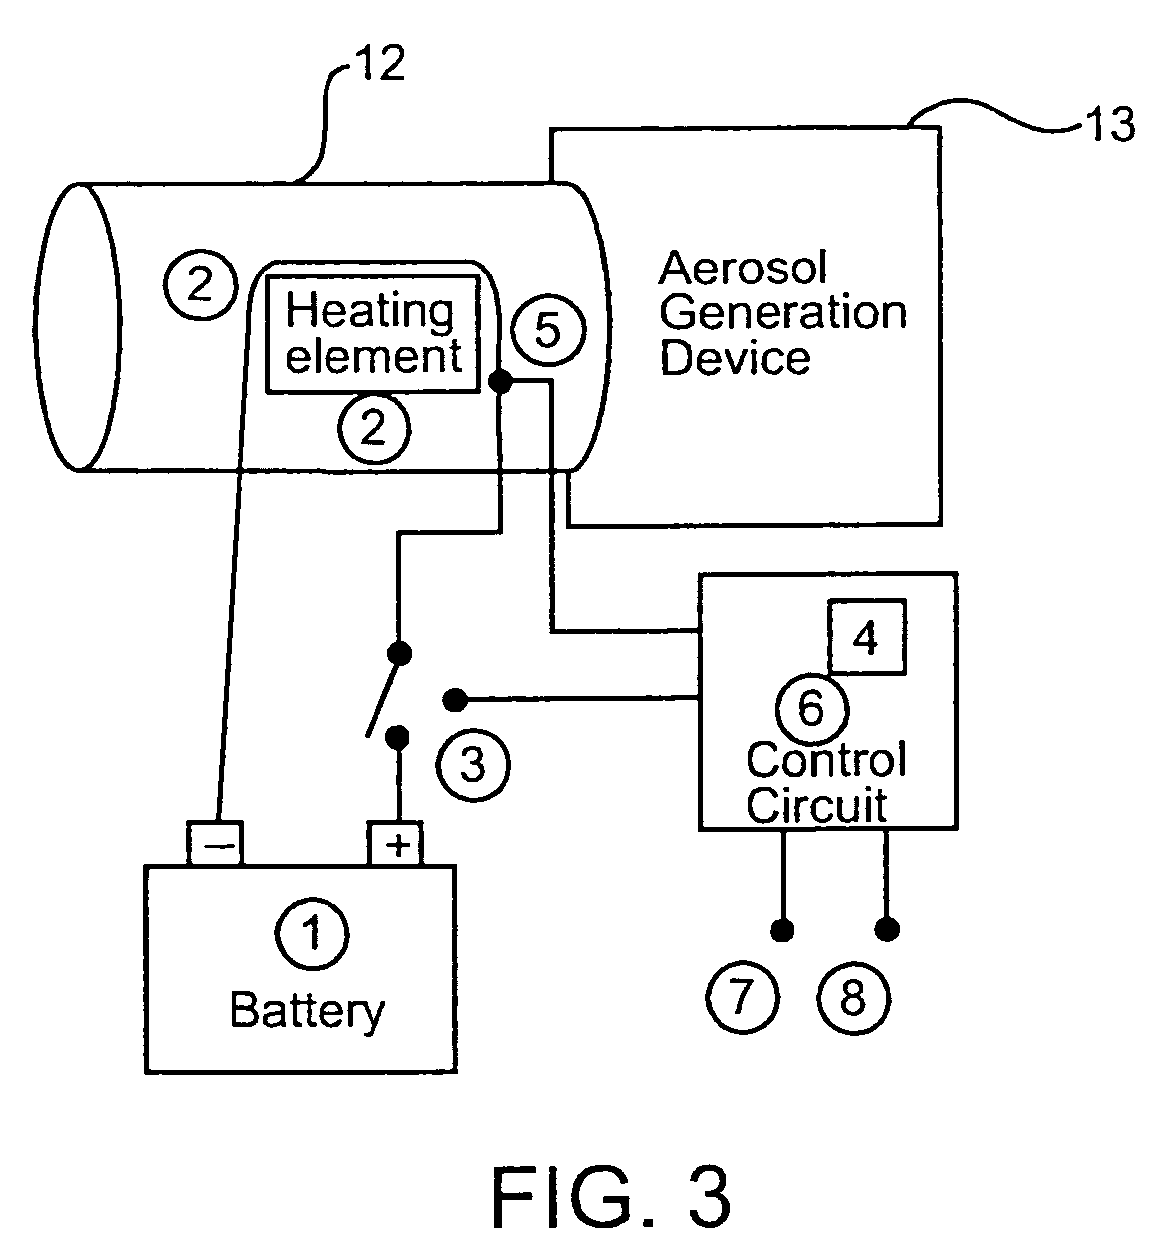 Temperature controlling device for aerosol drug delivery